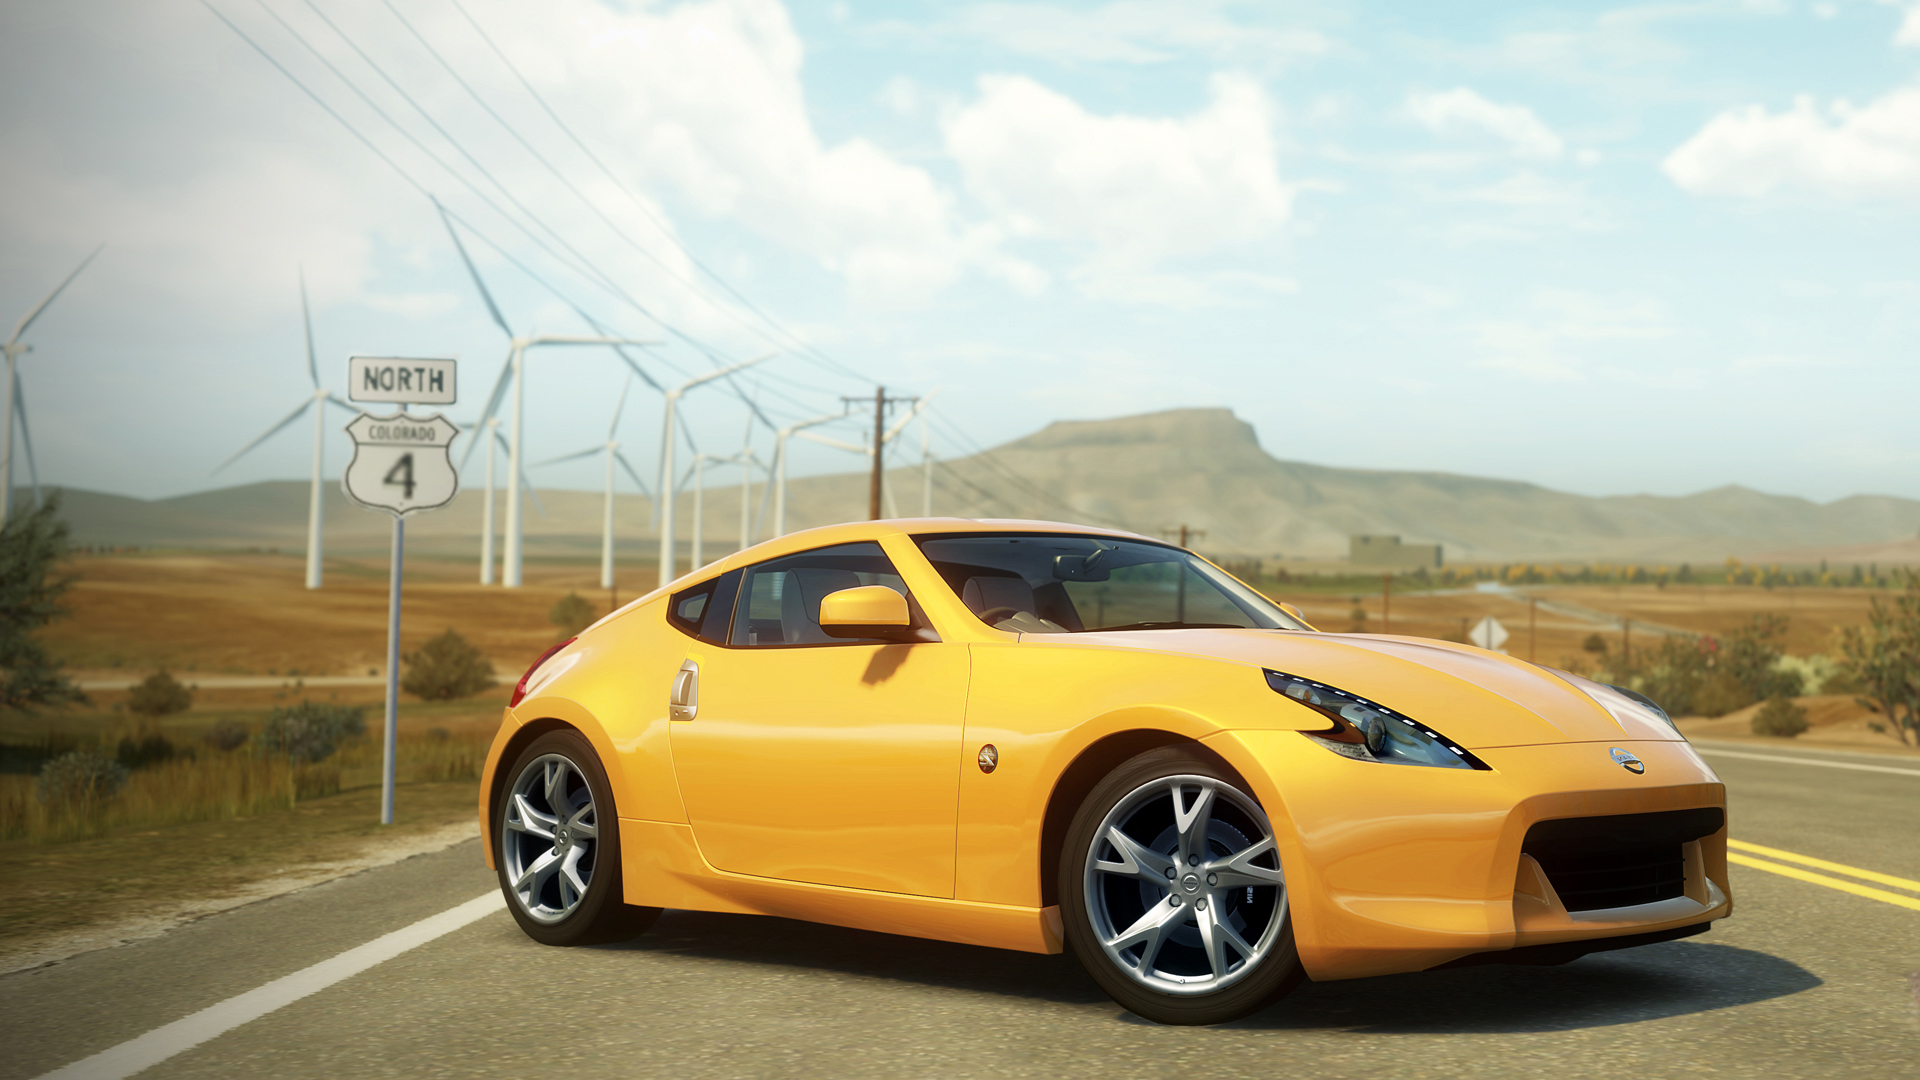 Baixar papel de parede para celular de Forza Motorsport, Videogame gratuito.